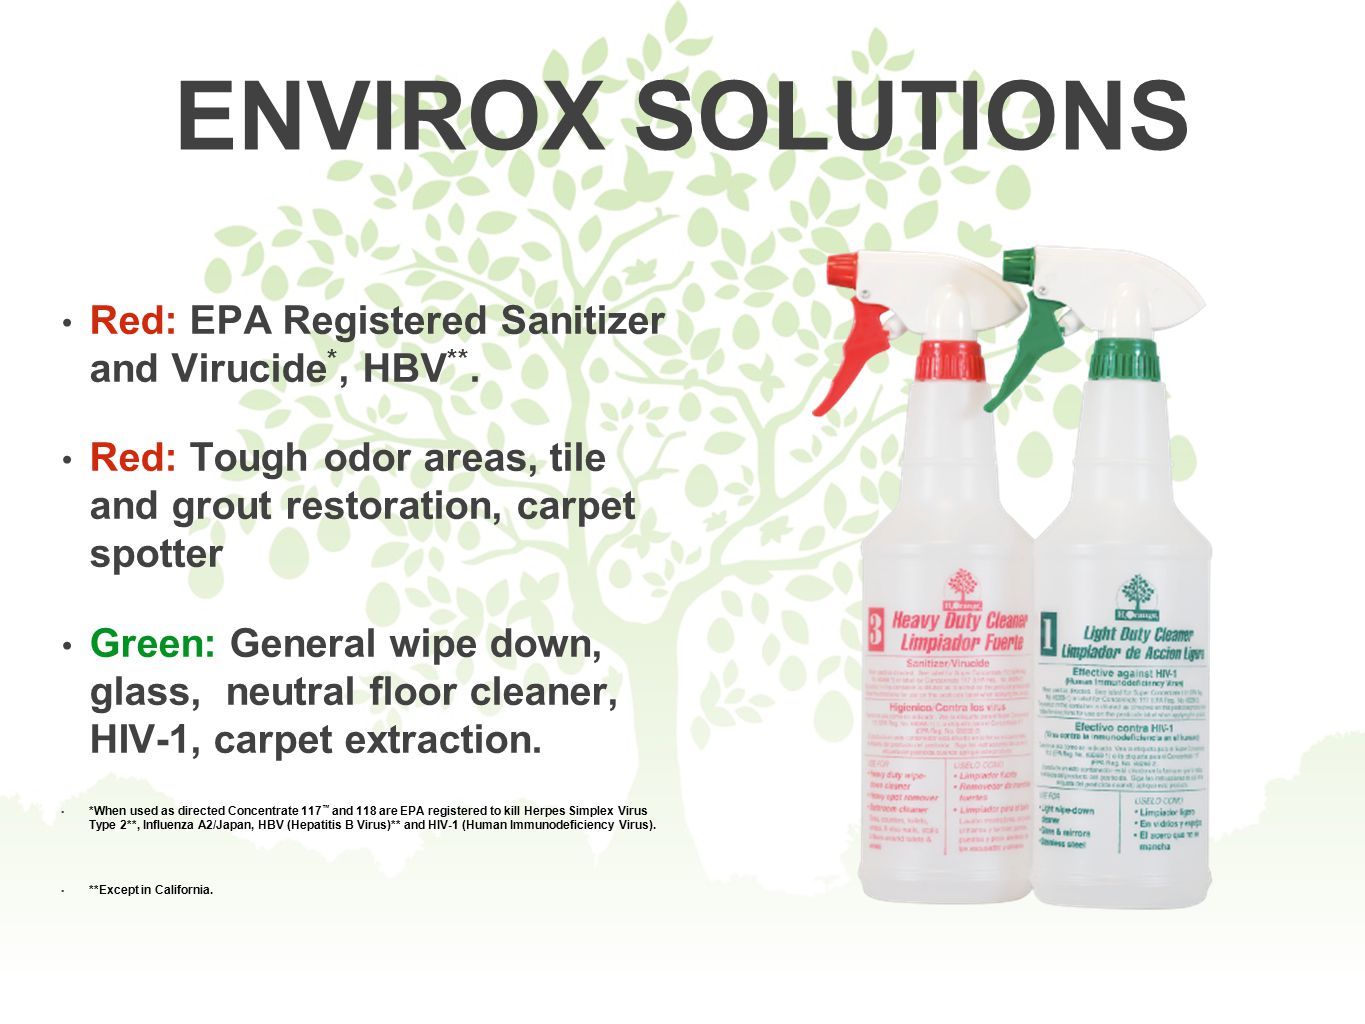 ENVIROX SOLUTIONS Red: EPA Registered Sanitizer and Virucide *, HBV **.